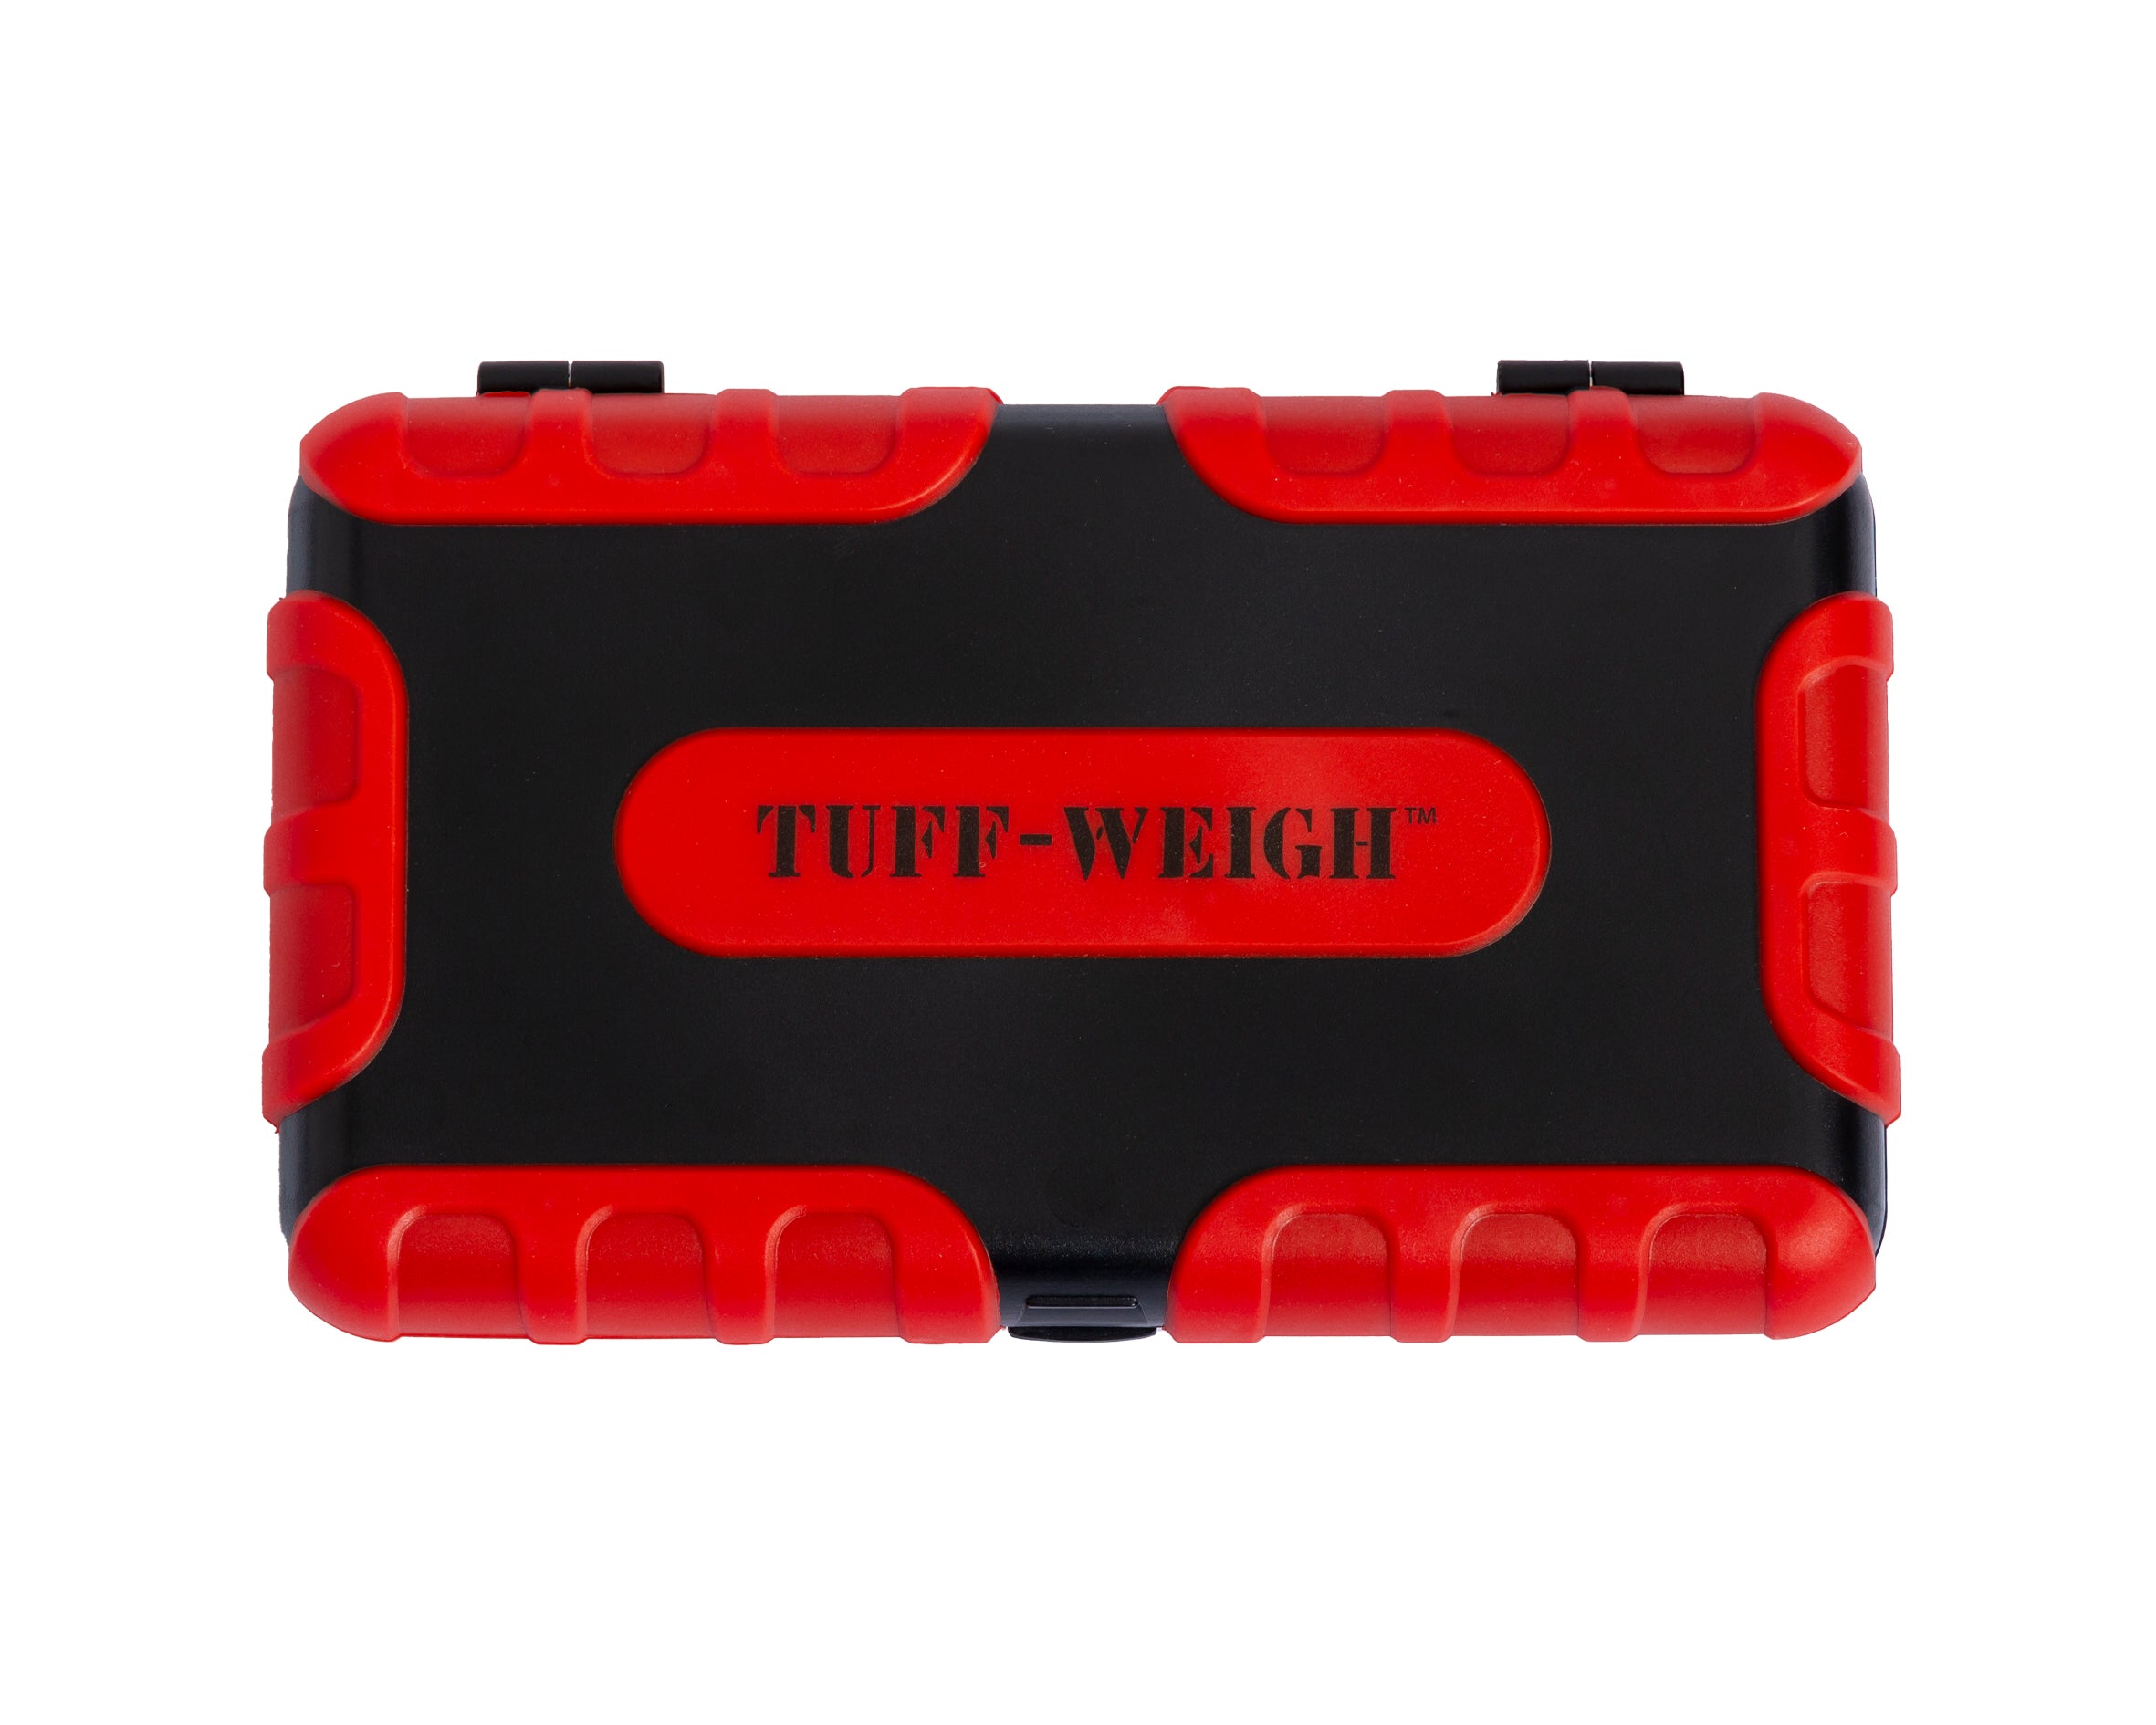 TUF-200-RD On Balance Tuff-Weigh Pocket Scale - Red 200g x 0.01g